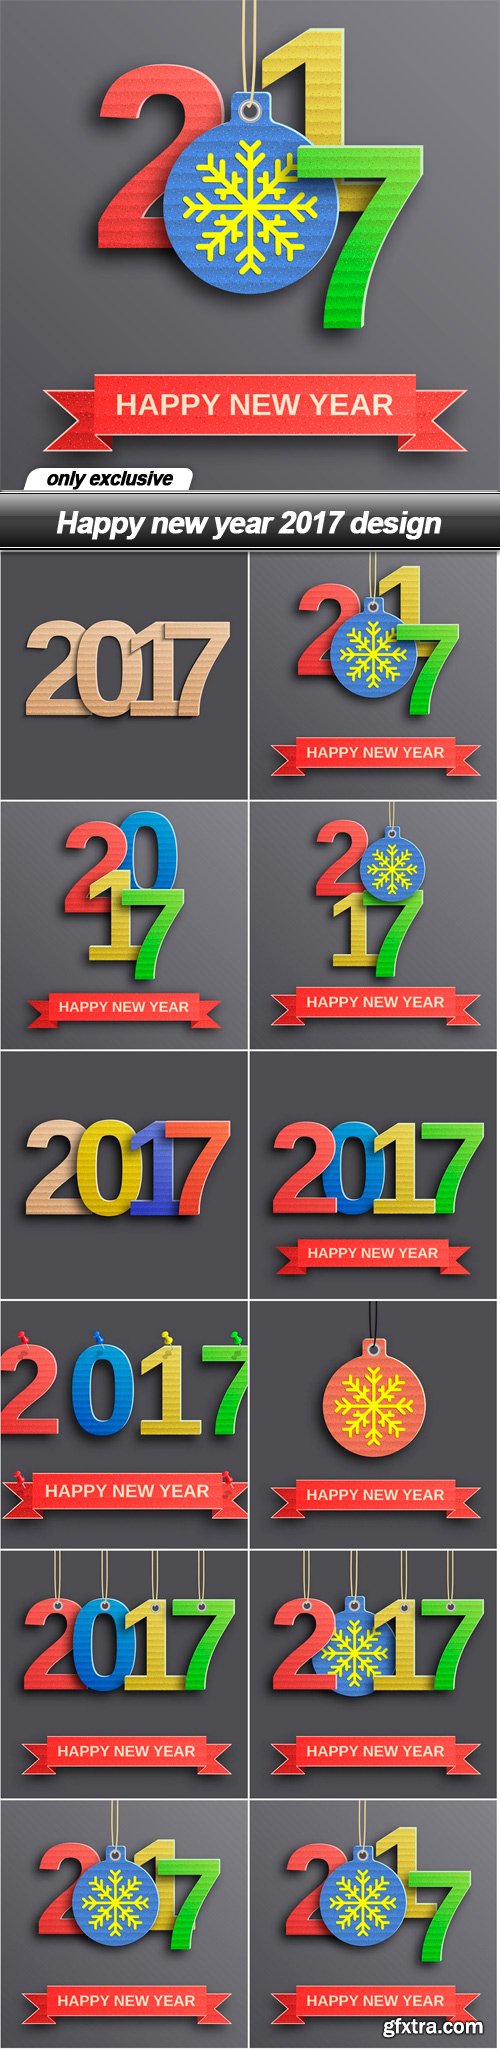 Happy new year 2017 design - 12 EPS